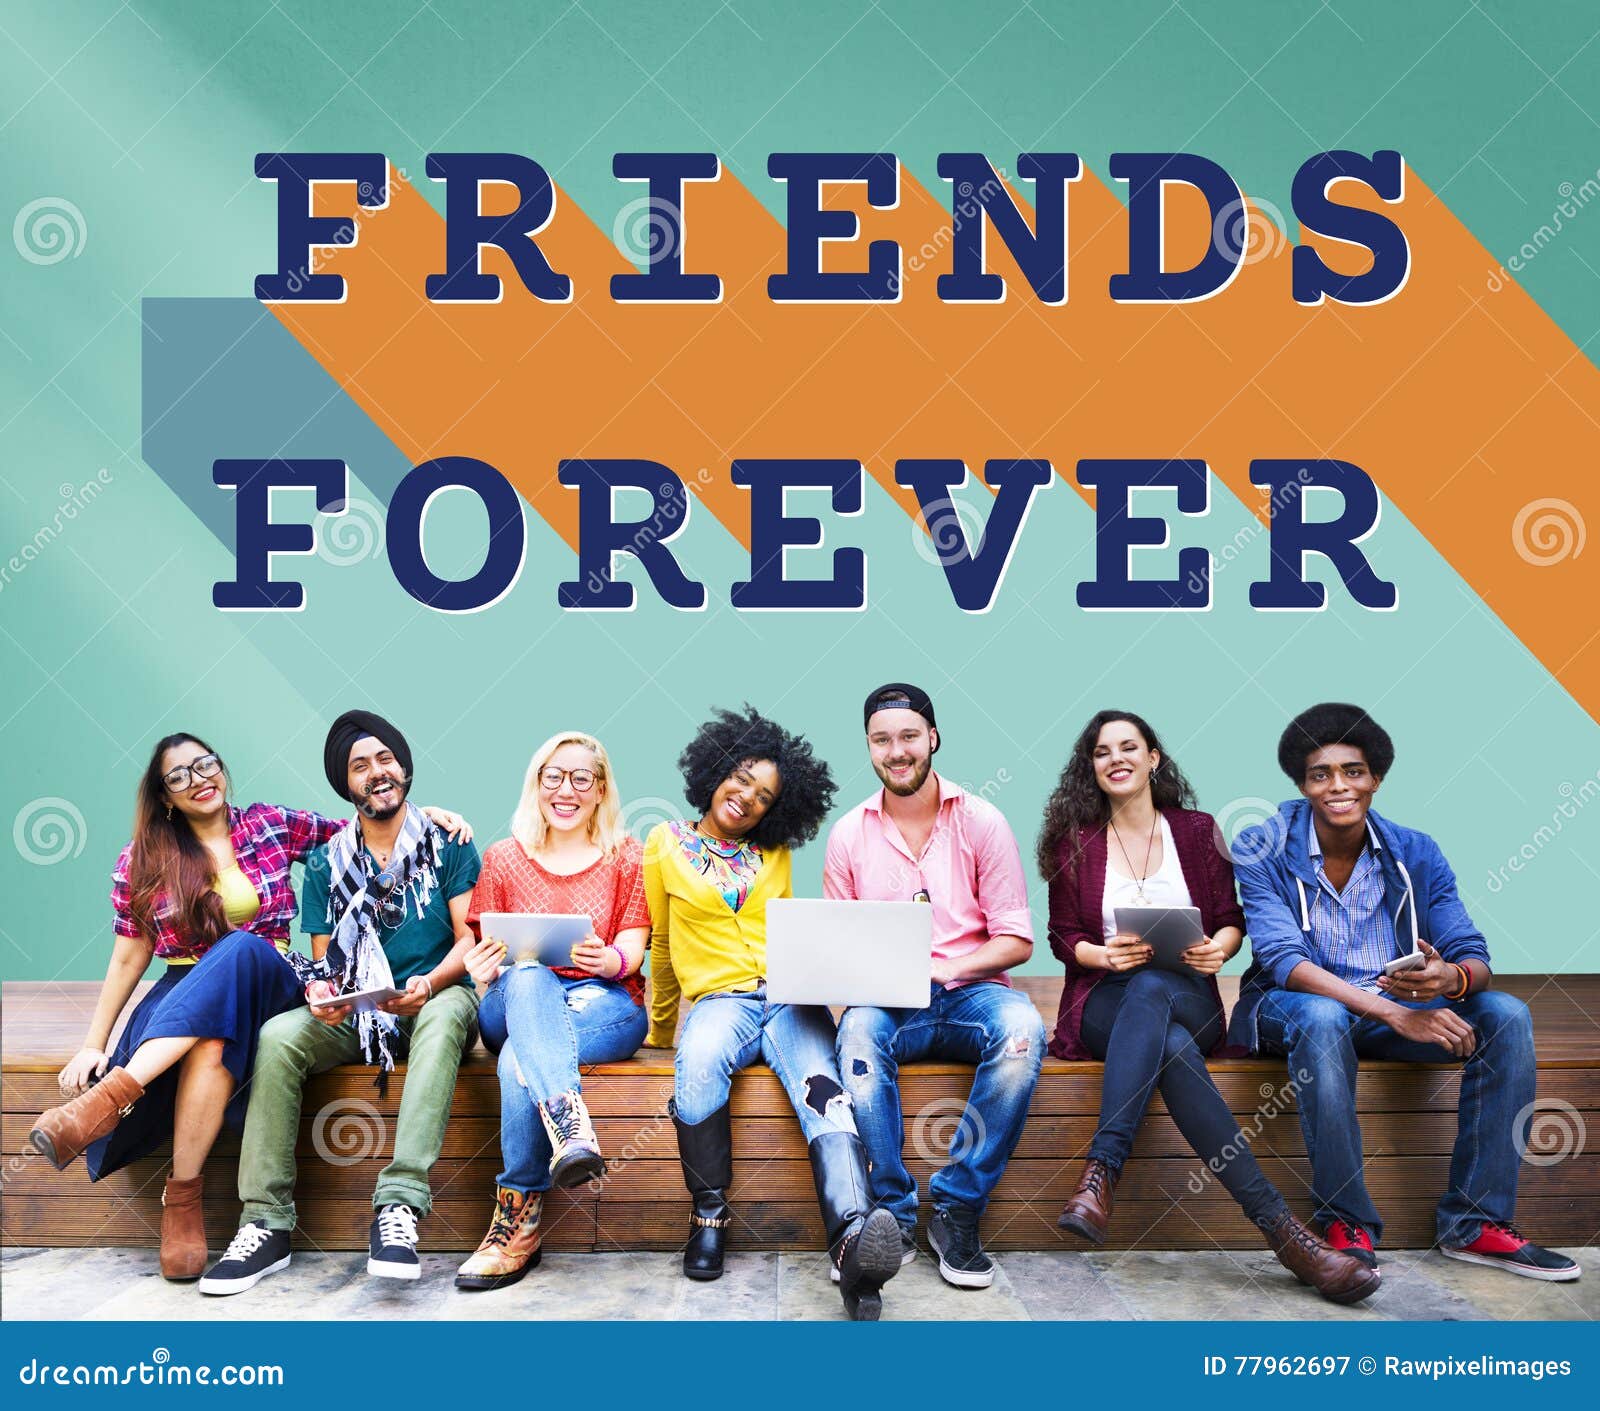 Friends Forever Community Partnership Unity Concept Stock Image ...